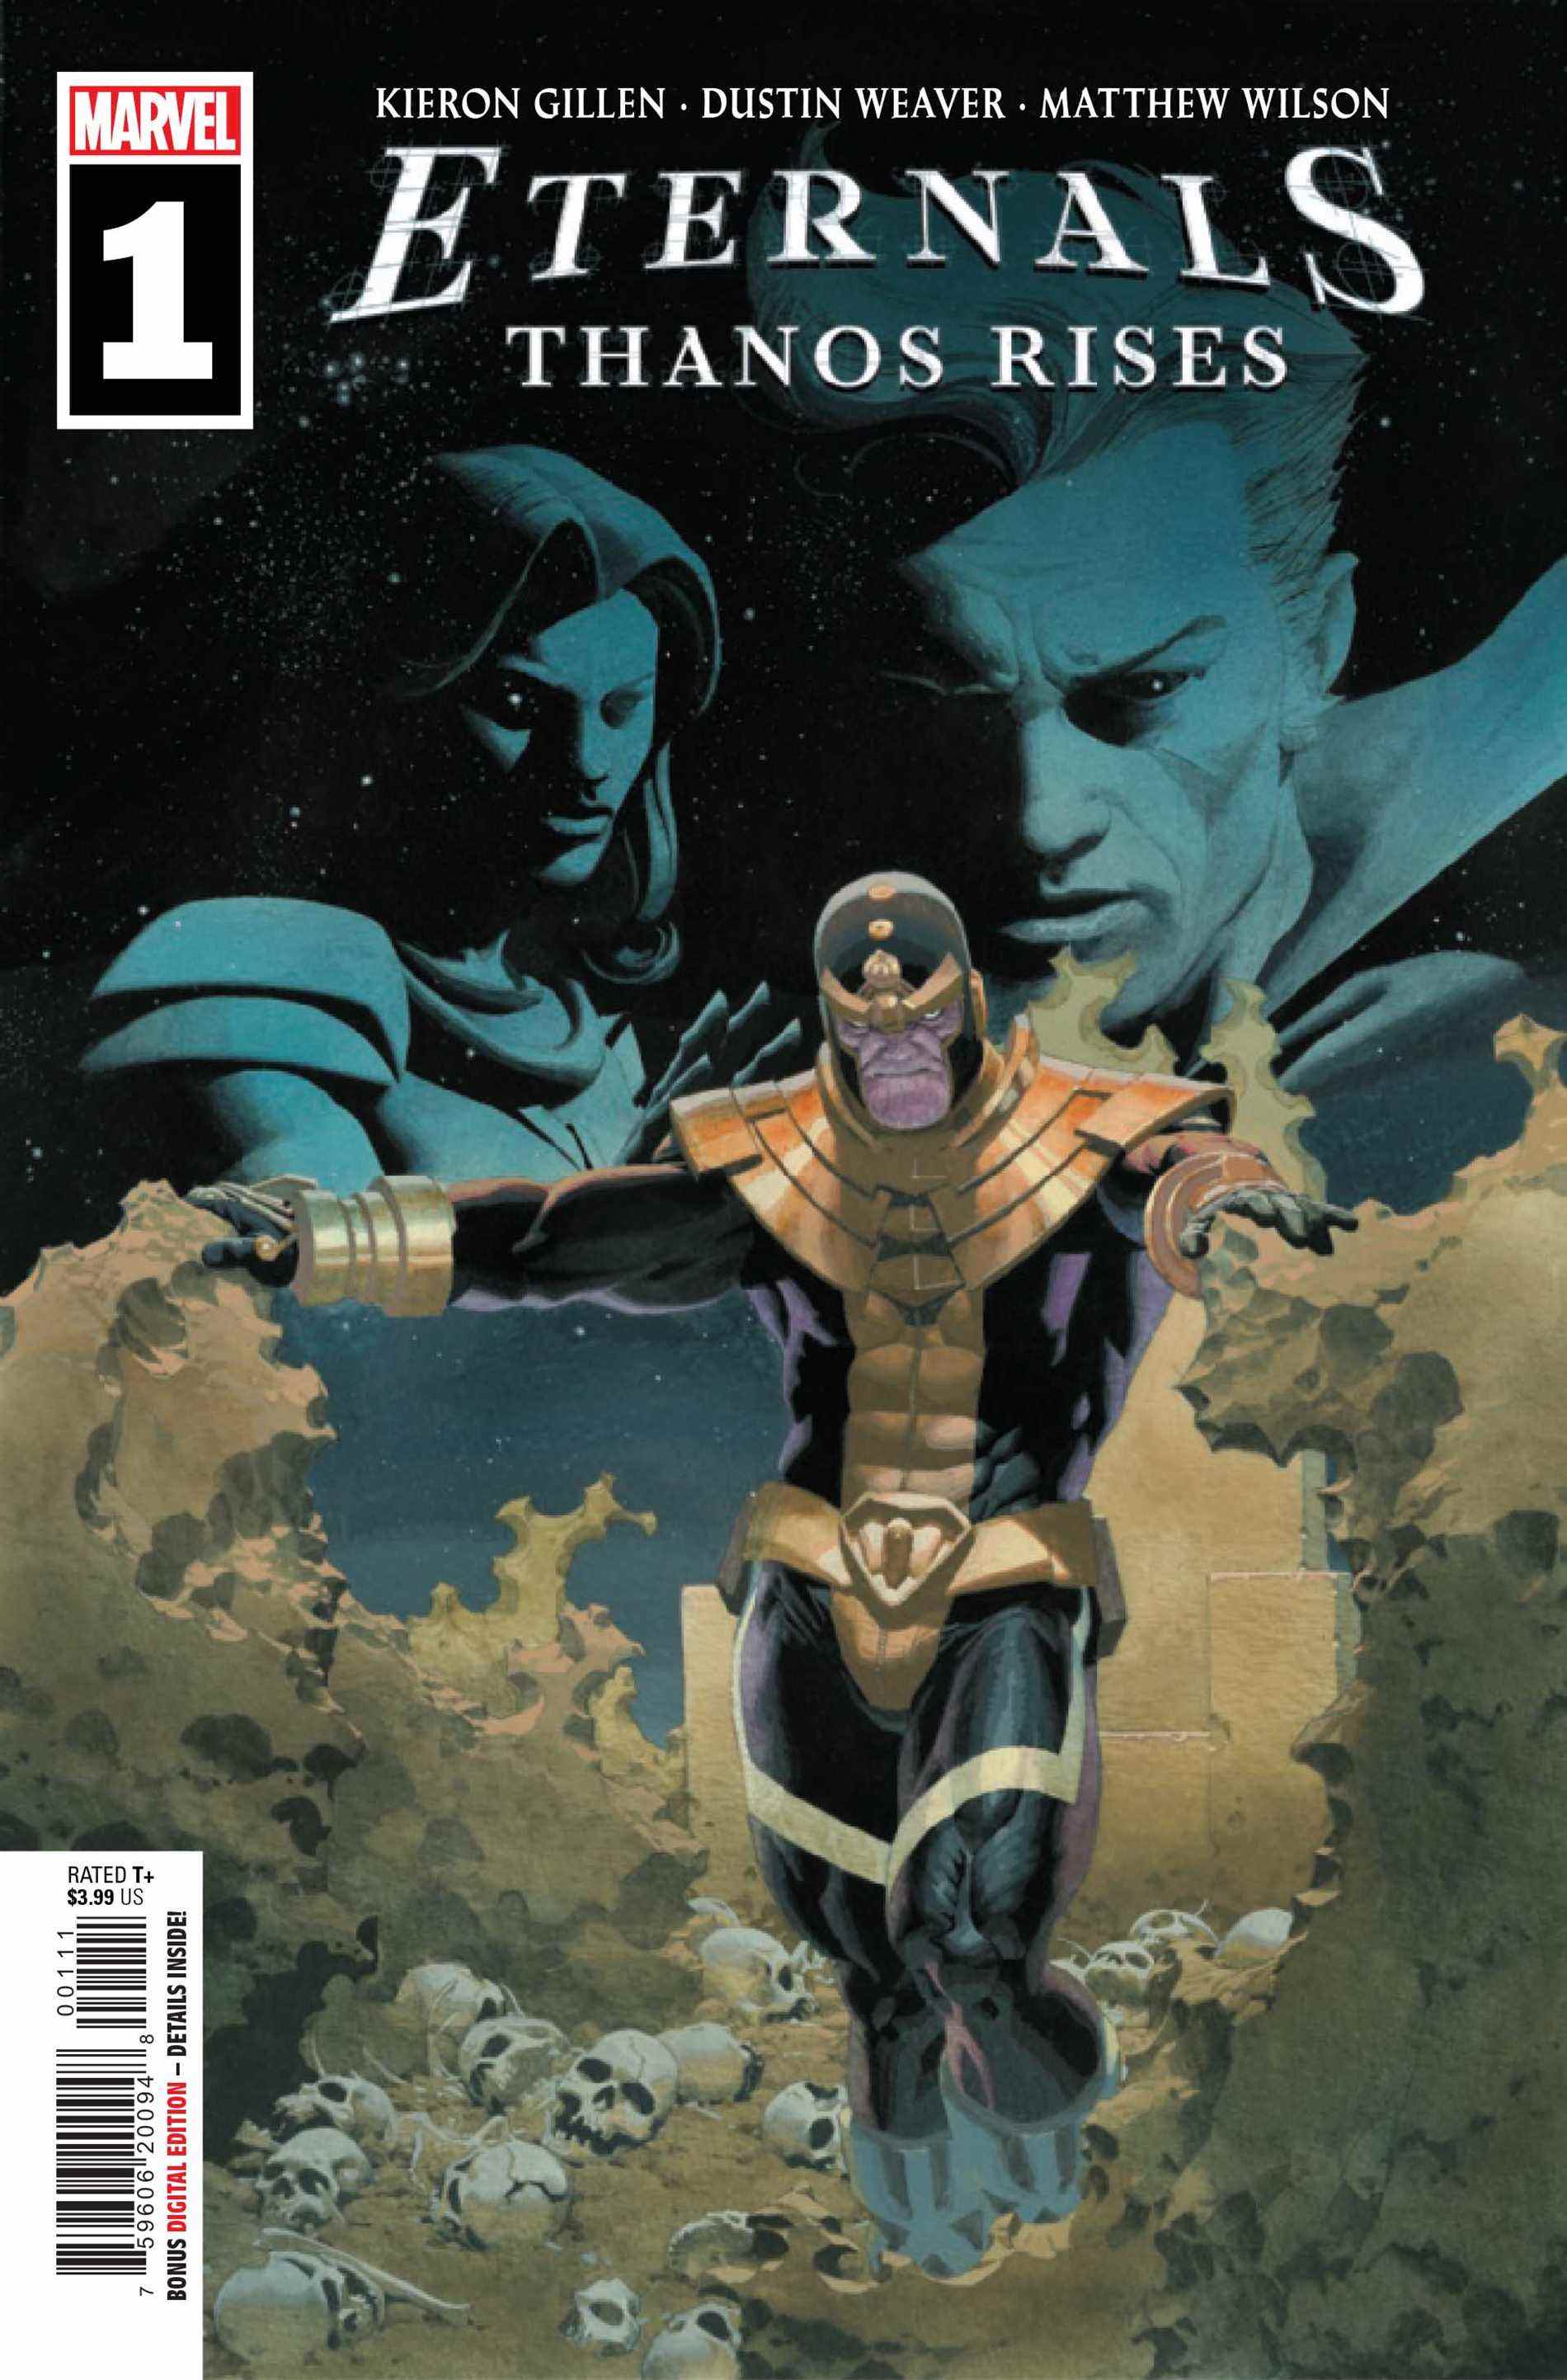 Eternals: Thanos Rises #1